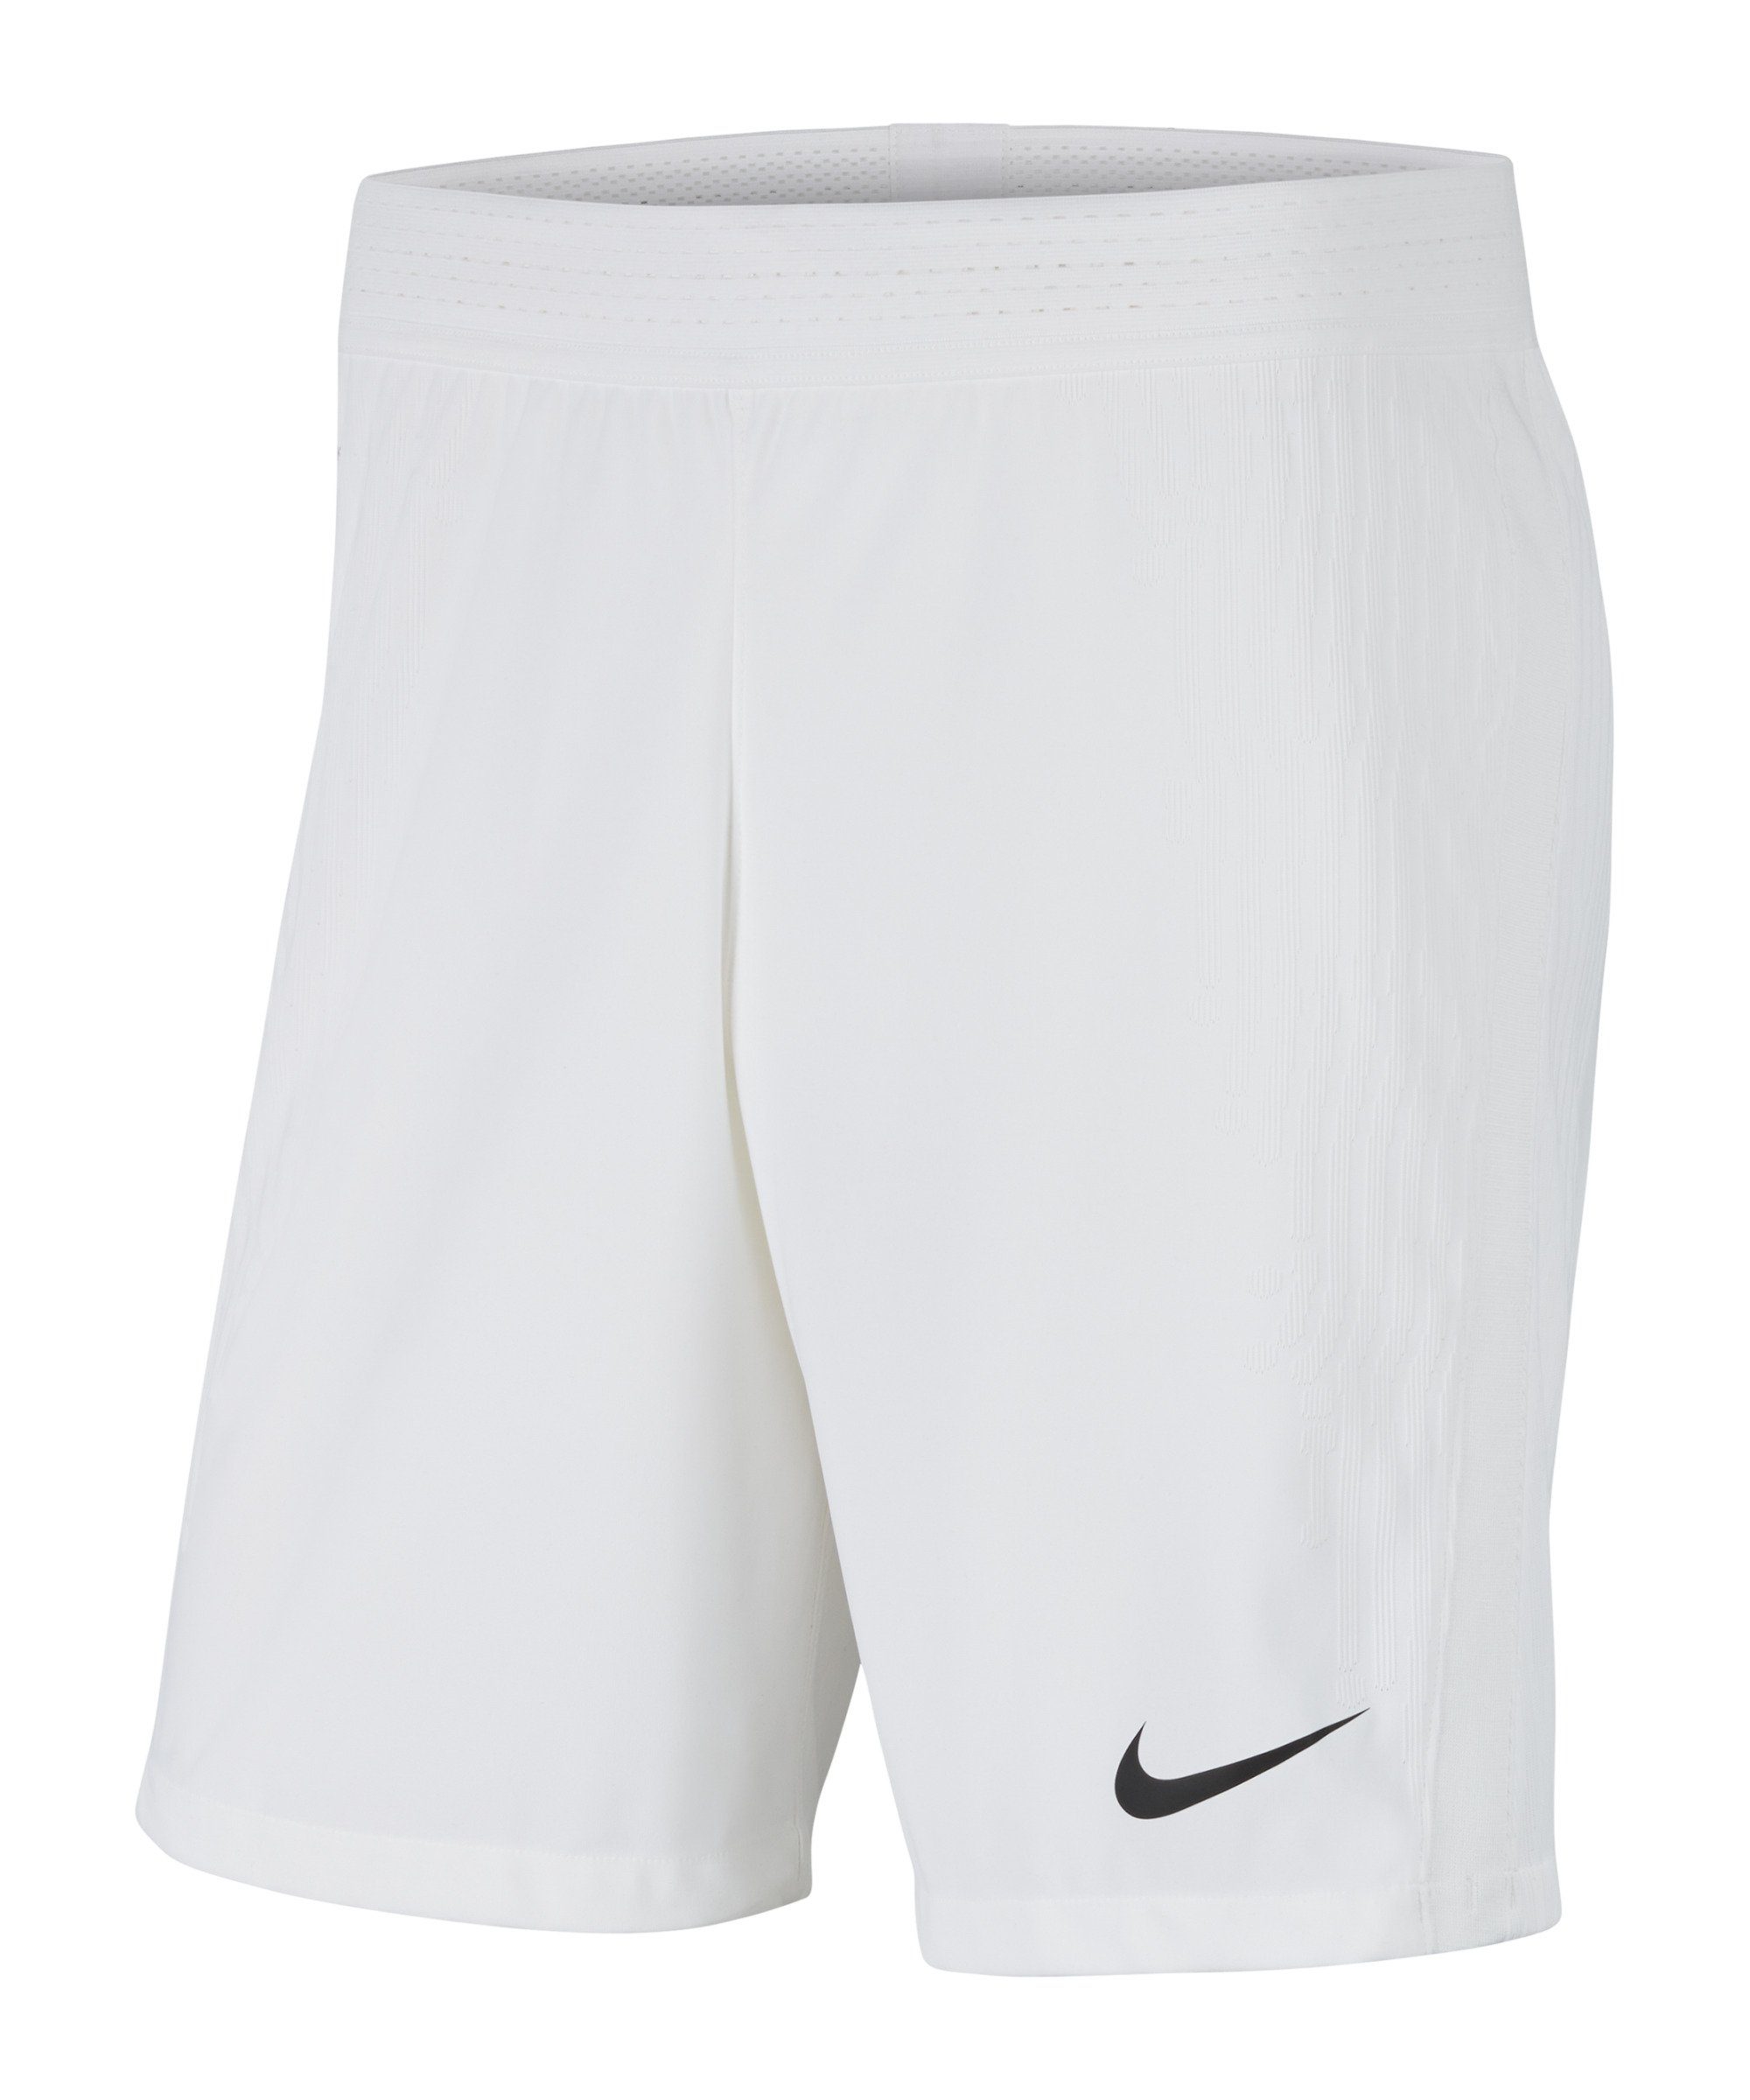 Nike Sporthose Vapor Knit Short weissschwarz III